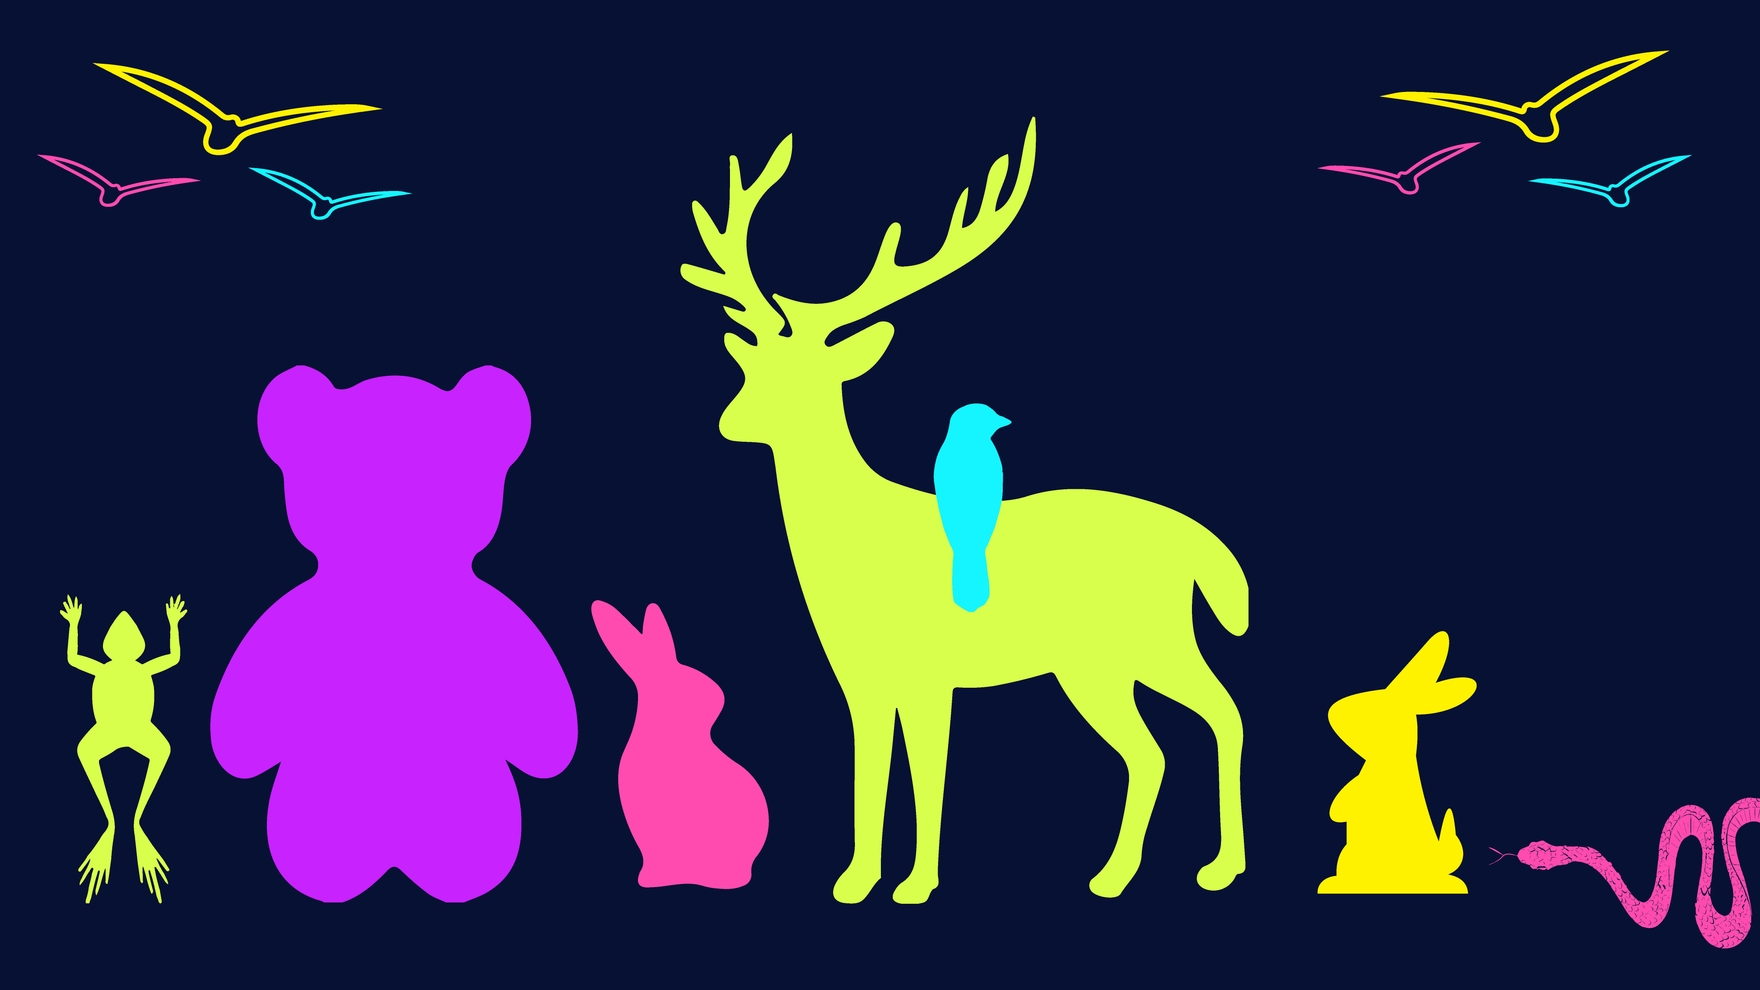 Neon Animal Background in Illustrator, EPS, SVG, JPG, PNG